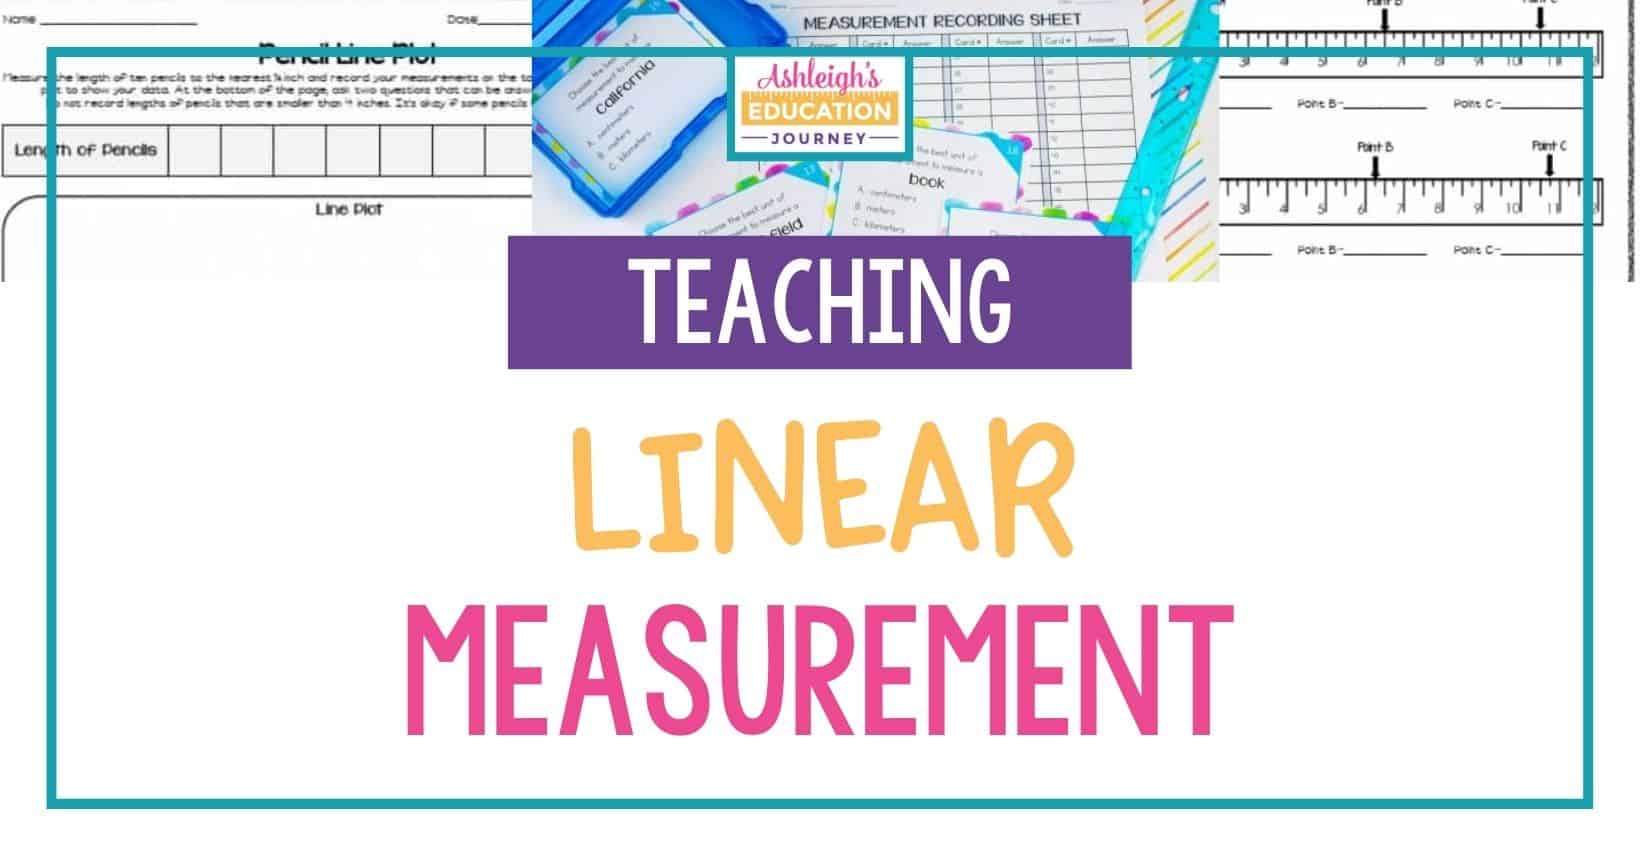 https://www.ashleigh-educationjourney.com/wp-content/uploads/2015/02/Teaching-Linear-Measurement.jpg